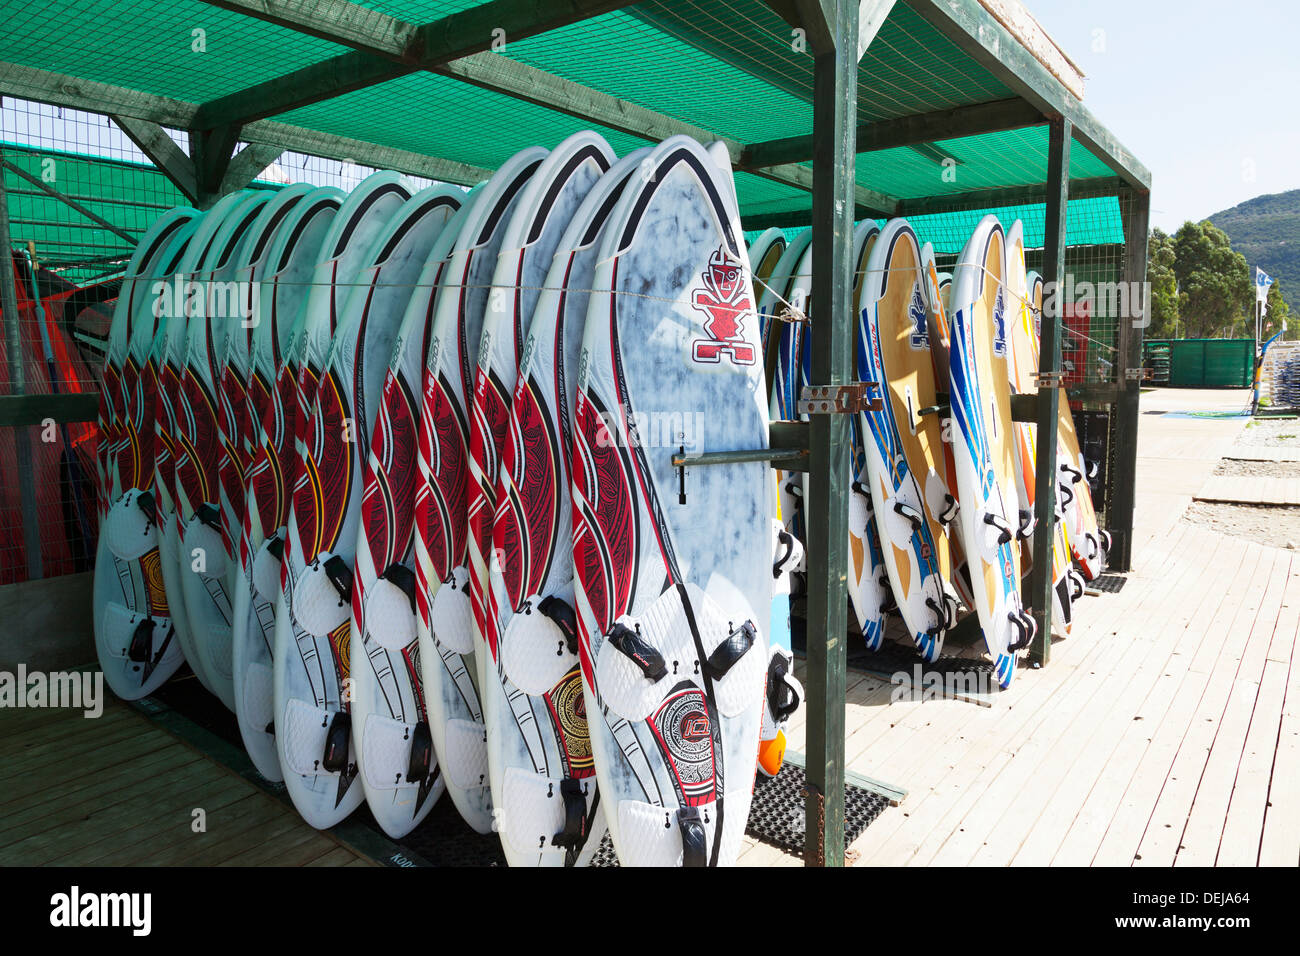 Windsurfing boards lined up for hire Vassiliki Vasiliki Lefkas Lefkada Greek Island Greece Stock Photo